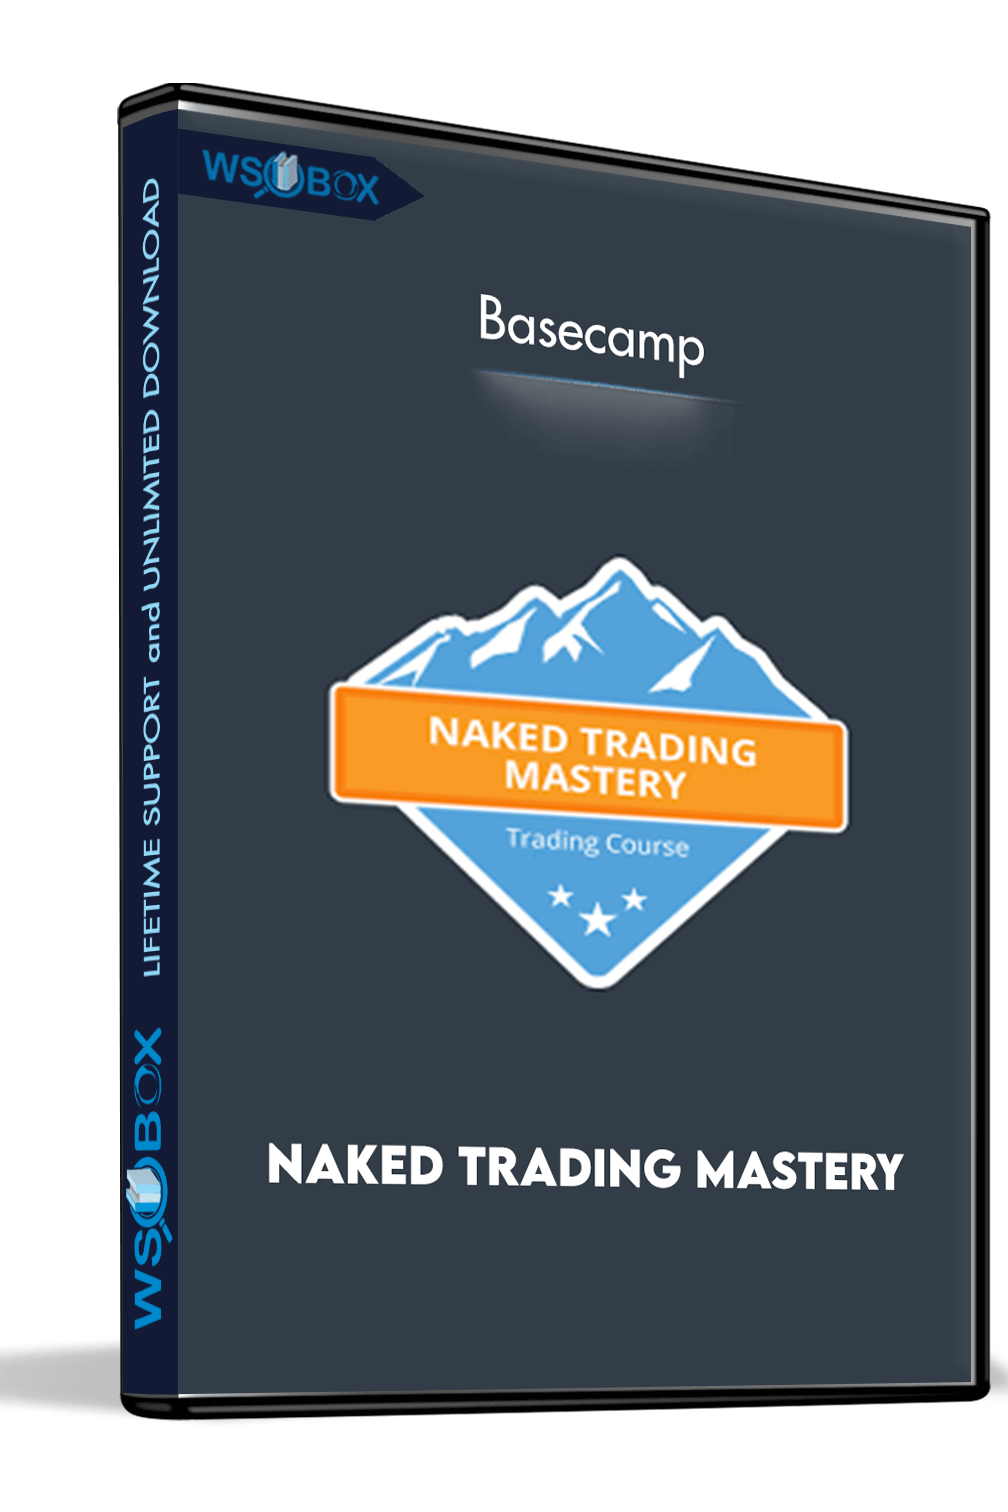 naked-trading-mastery-basecamp